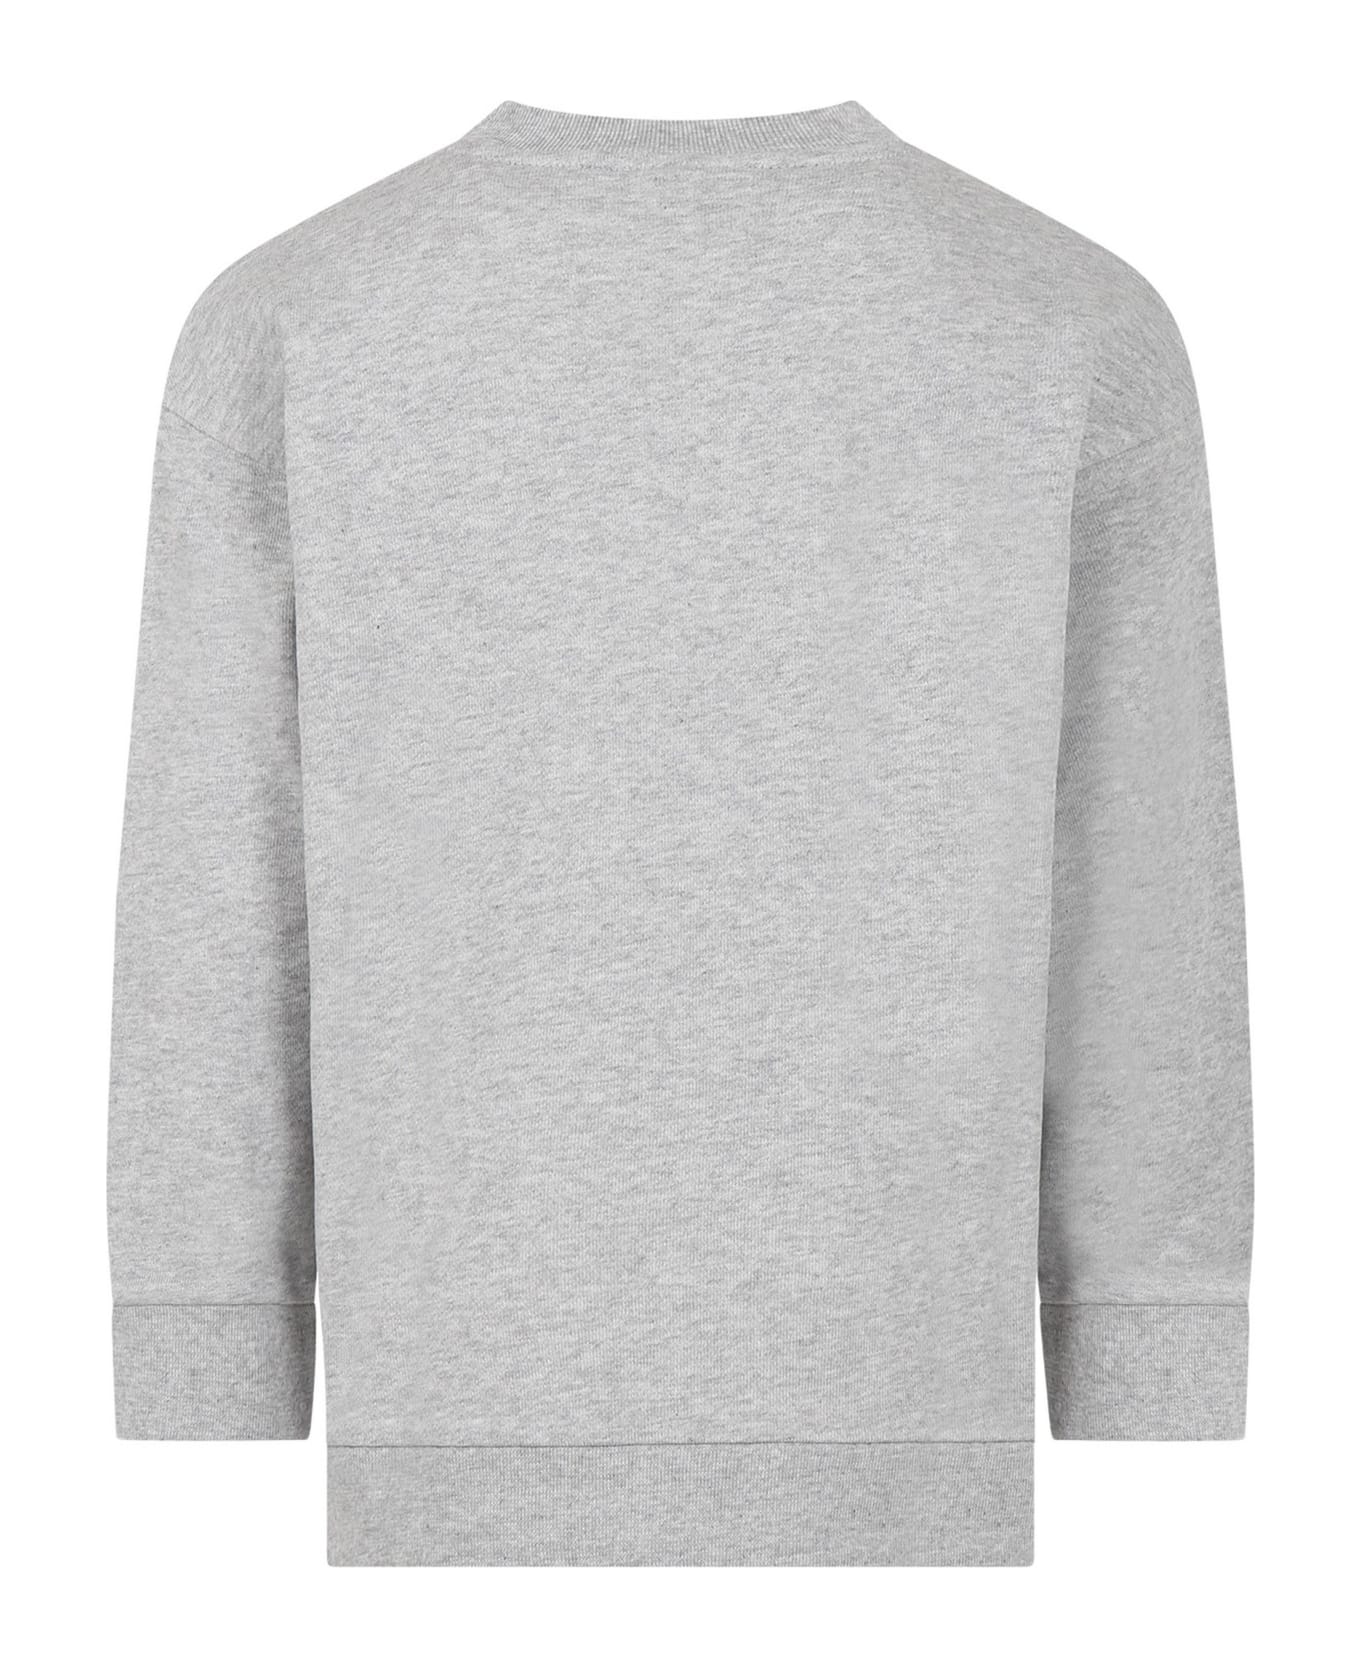 Fendi Grey Sweatshirt For Kids With Logo - Grey